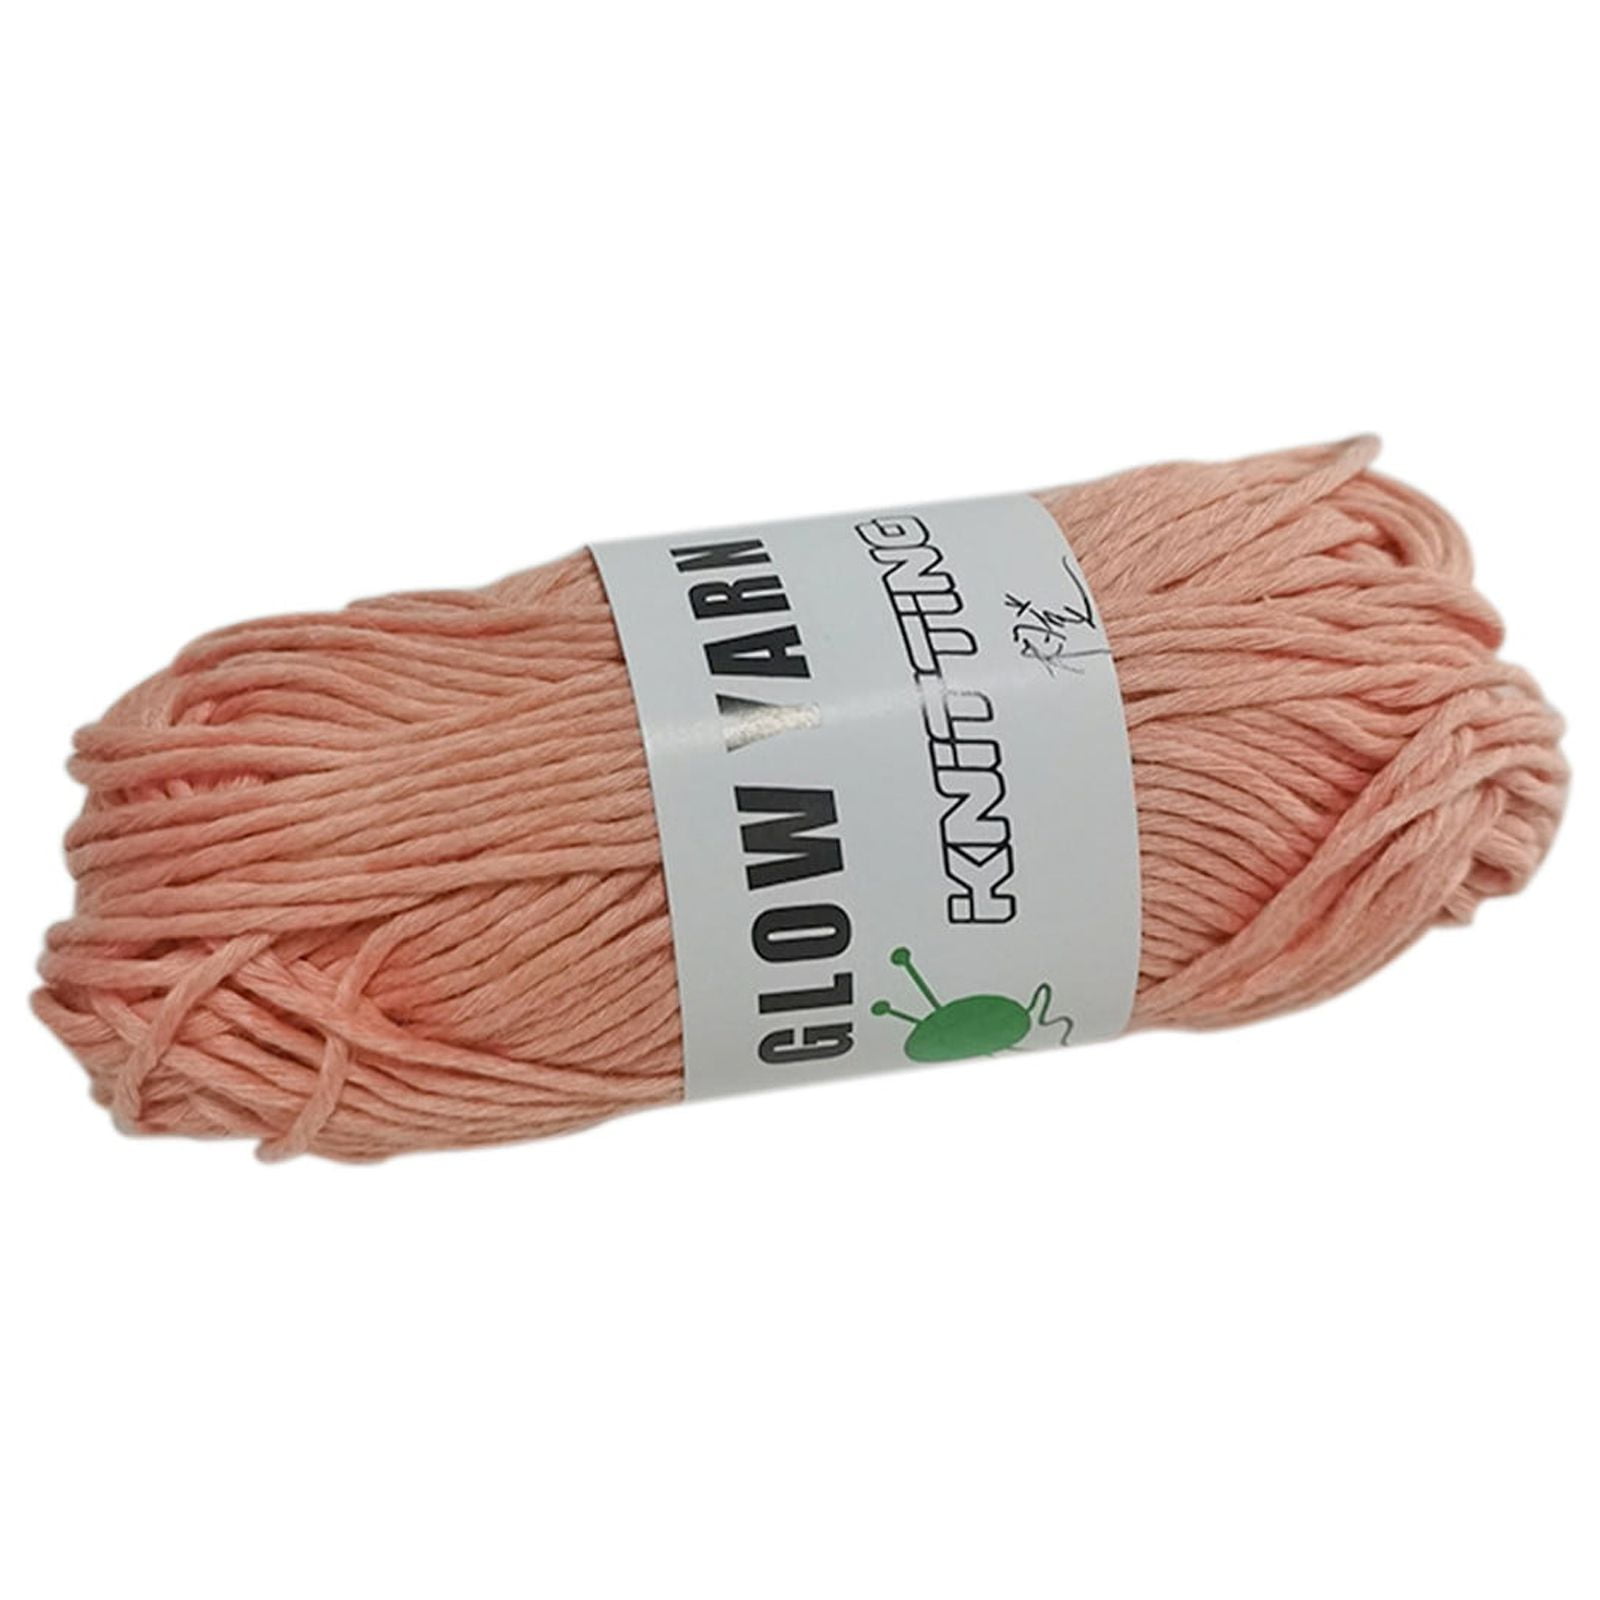 COLORFUL YARN BOBBIN SET - perfect for storing scrap yarn. ♥ FREE